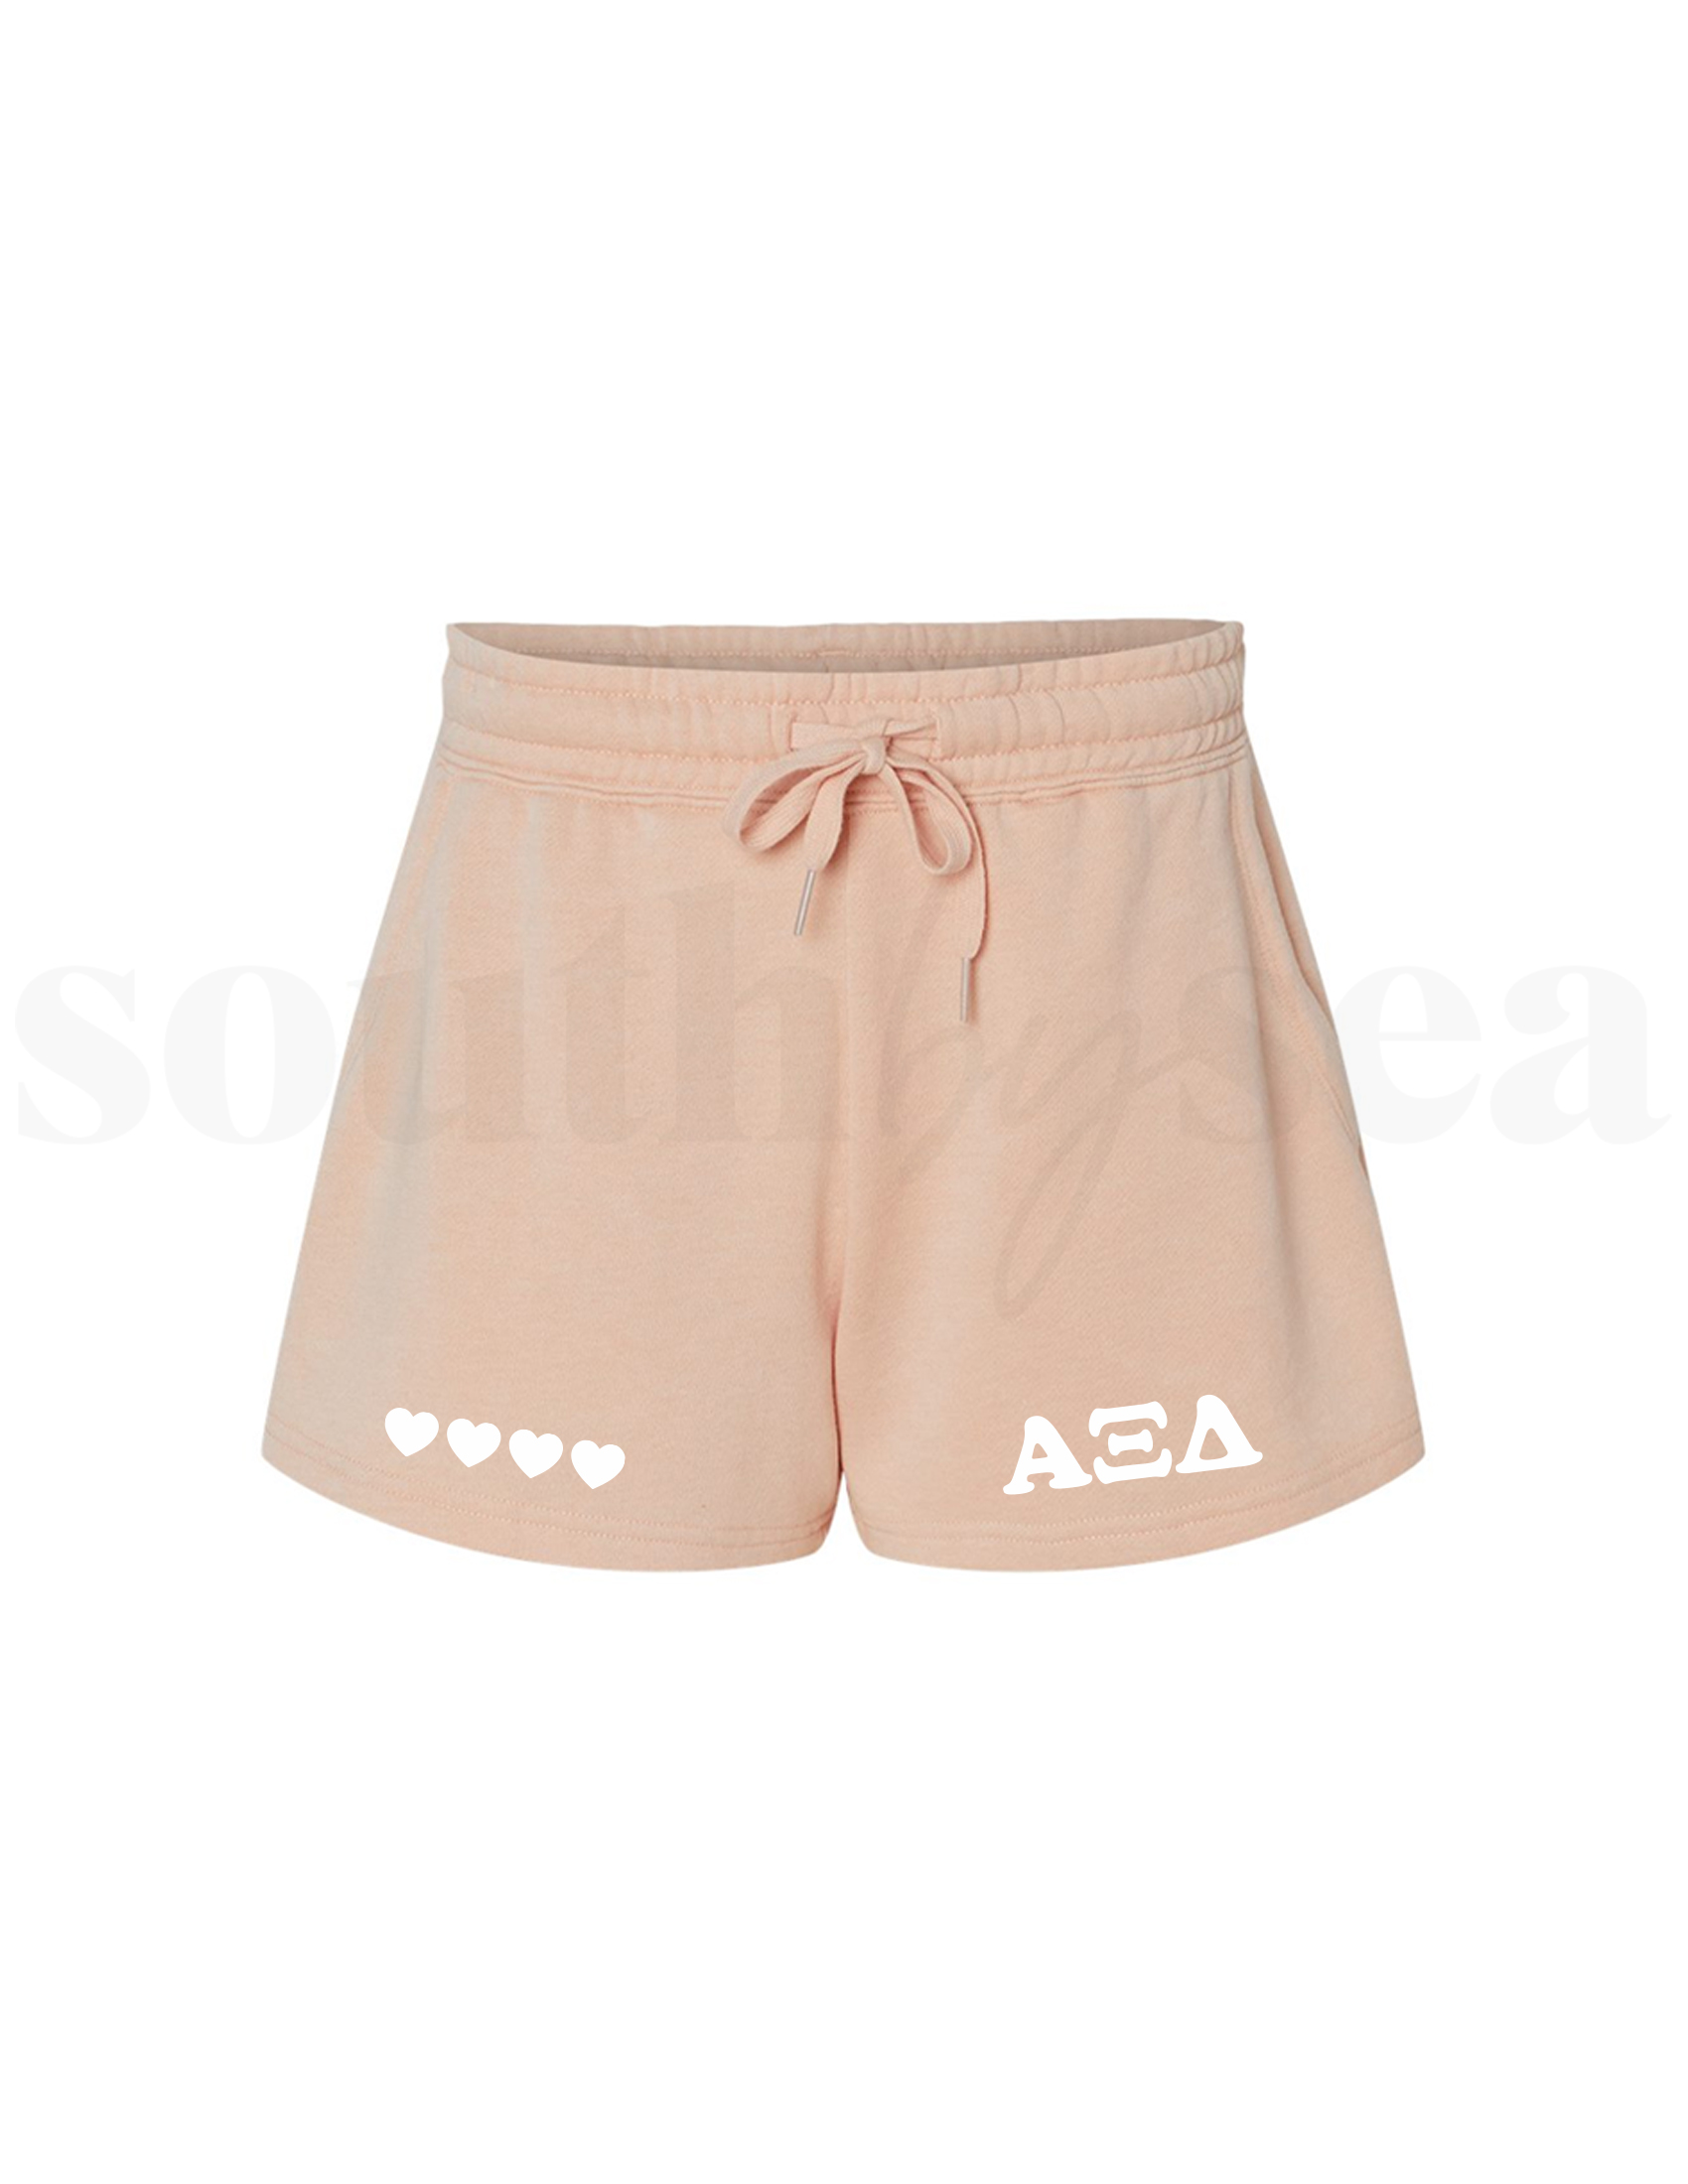 Alpha Xi Delta Blush Shorts